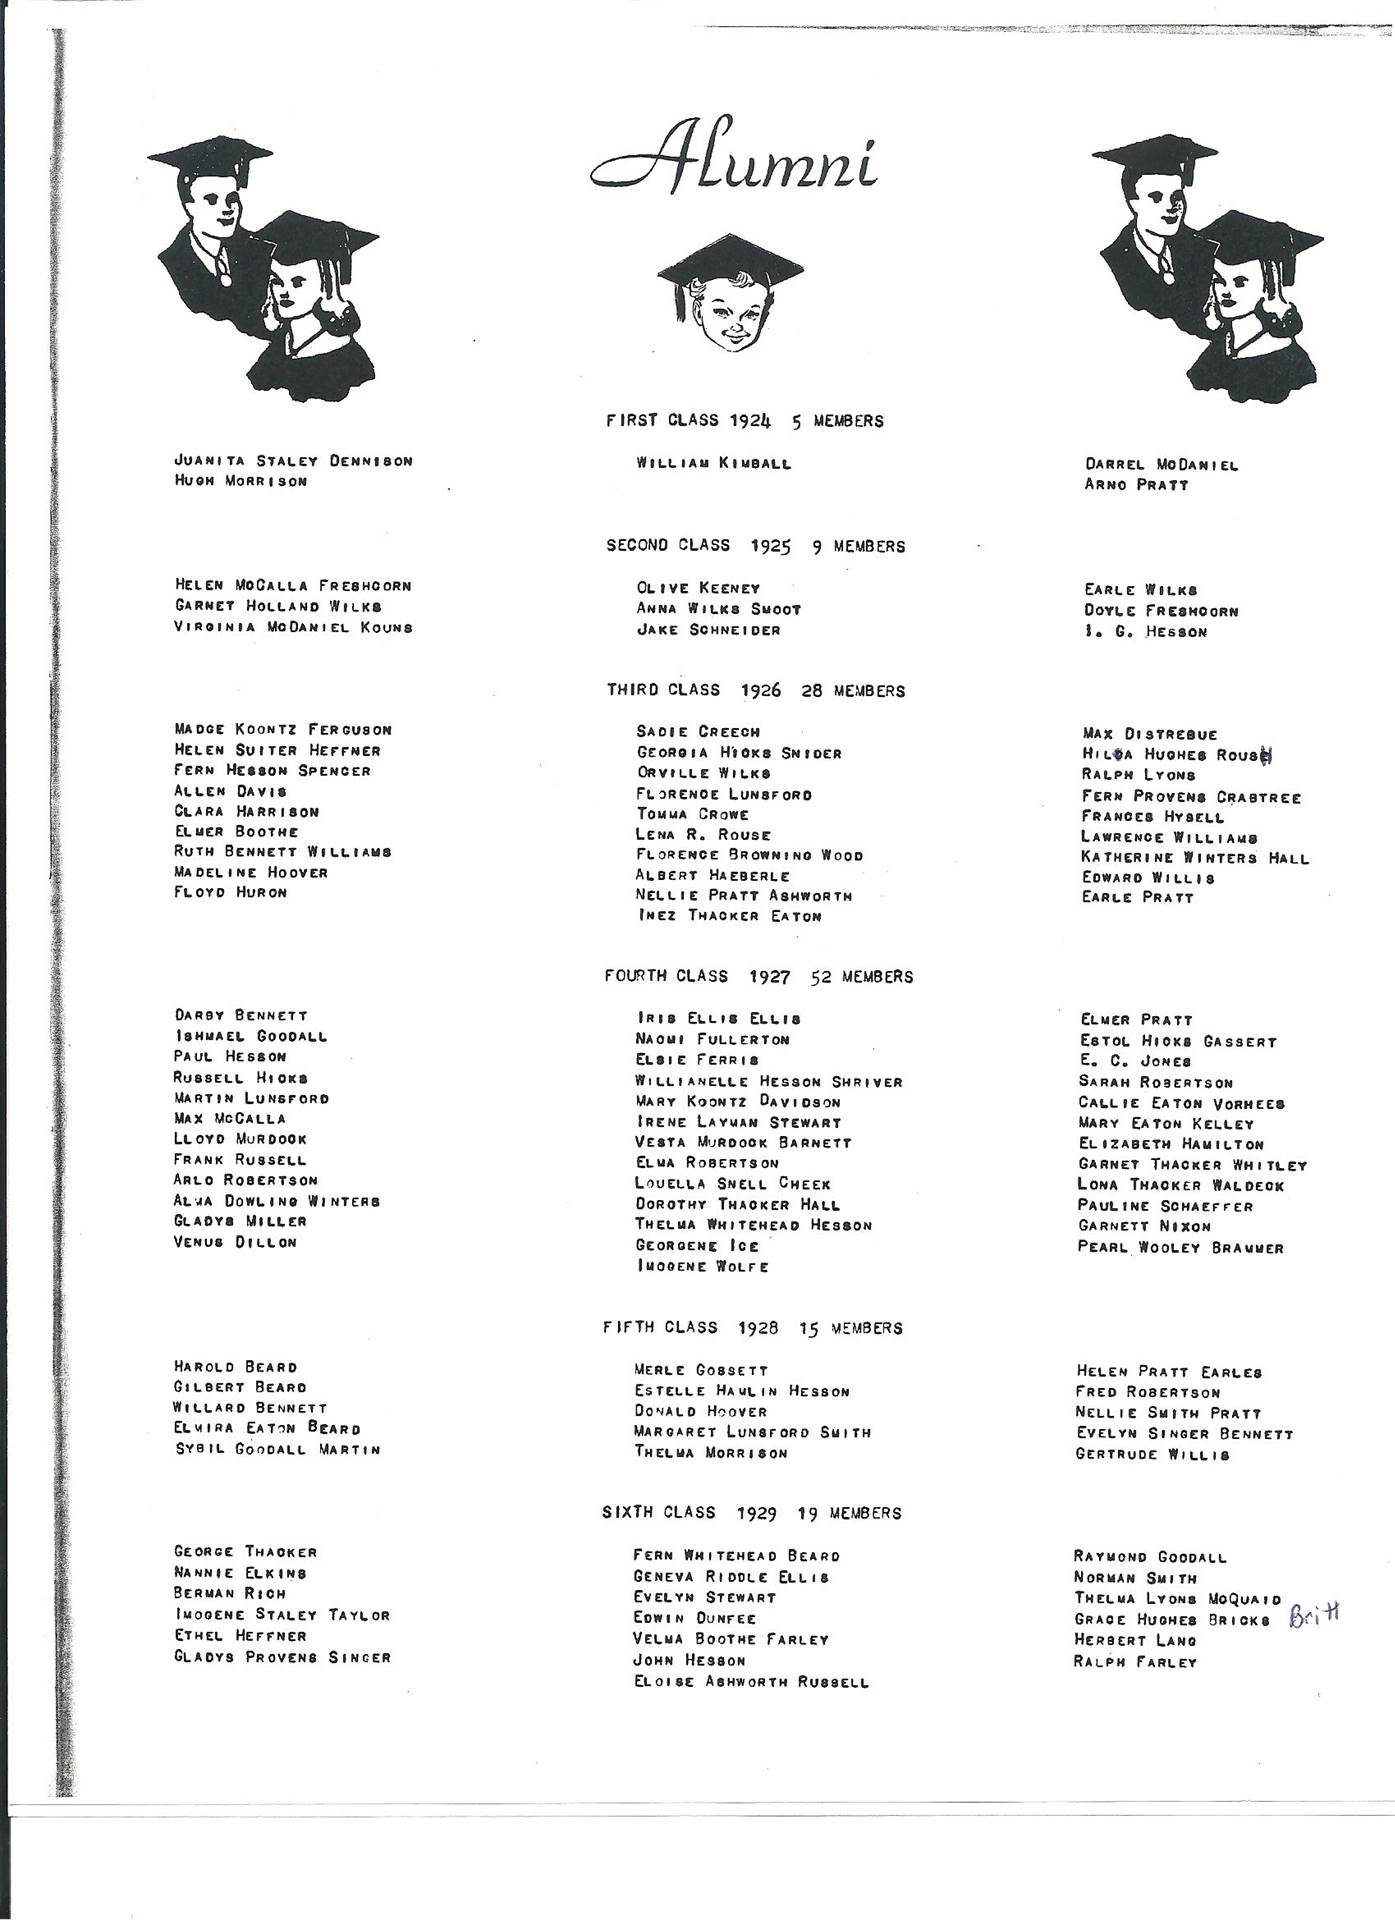 Chesapeake High School Class Roster 1924-1929